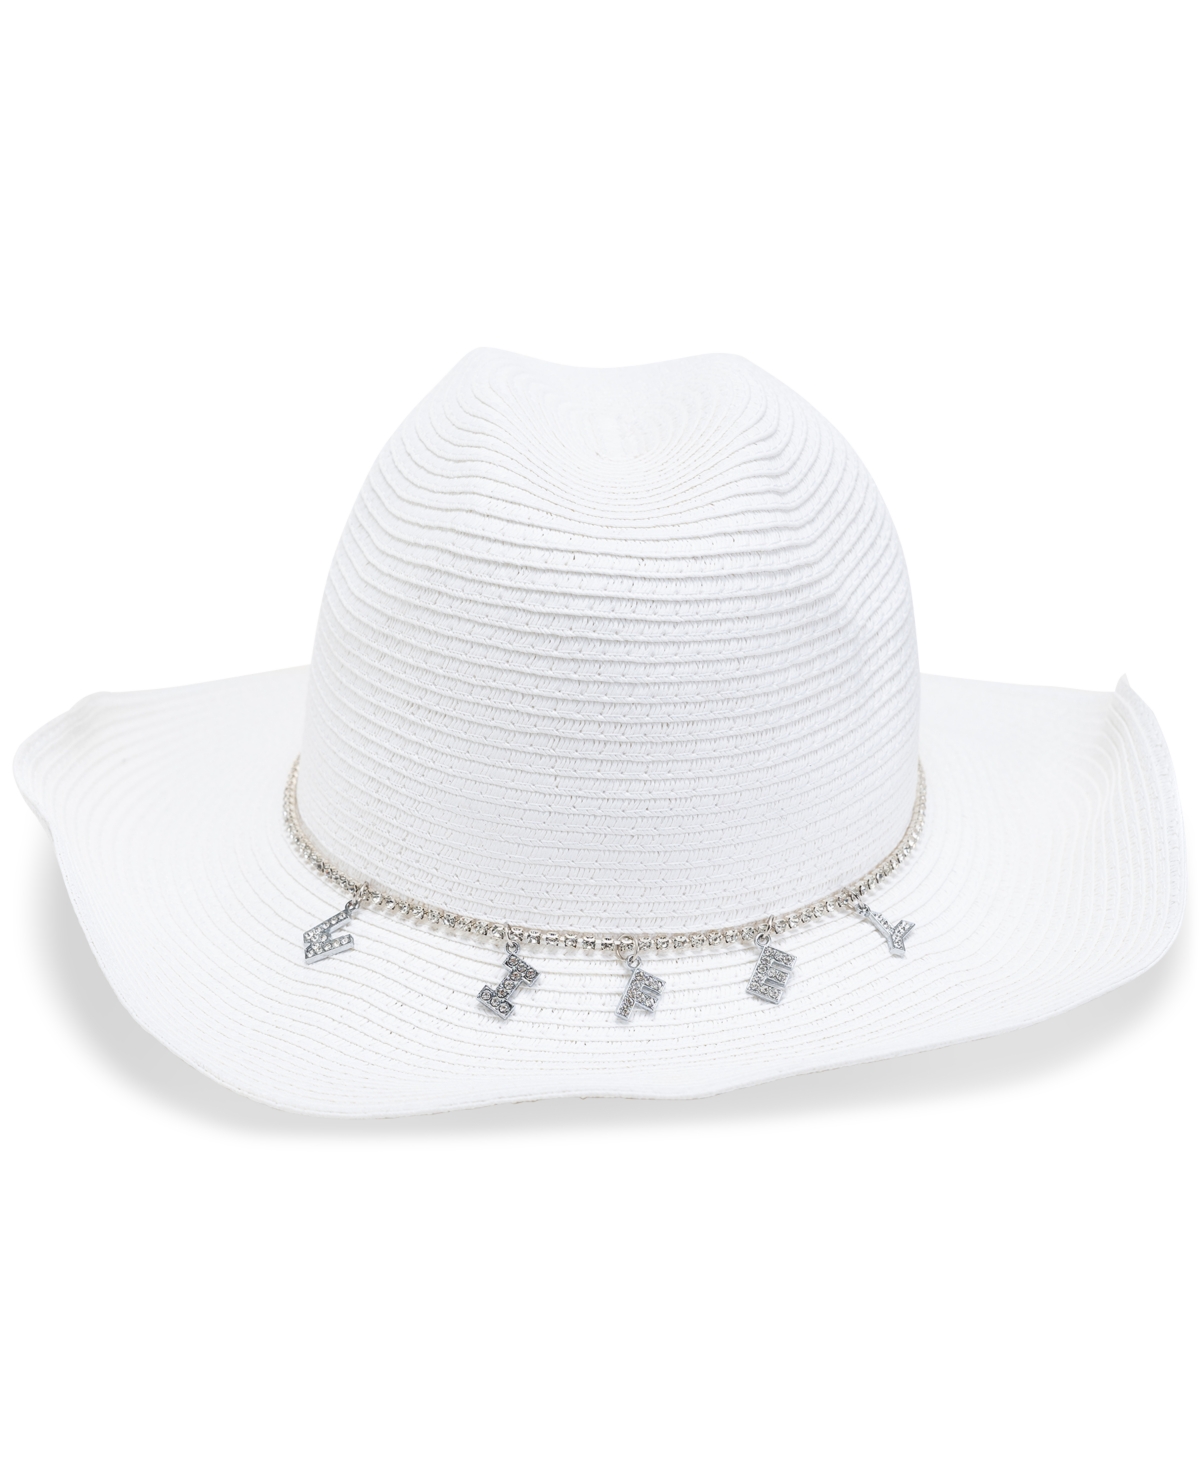 Women's Wifey Rhinestone Cowgirl Hat - White